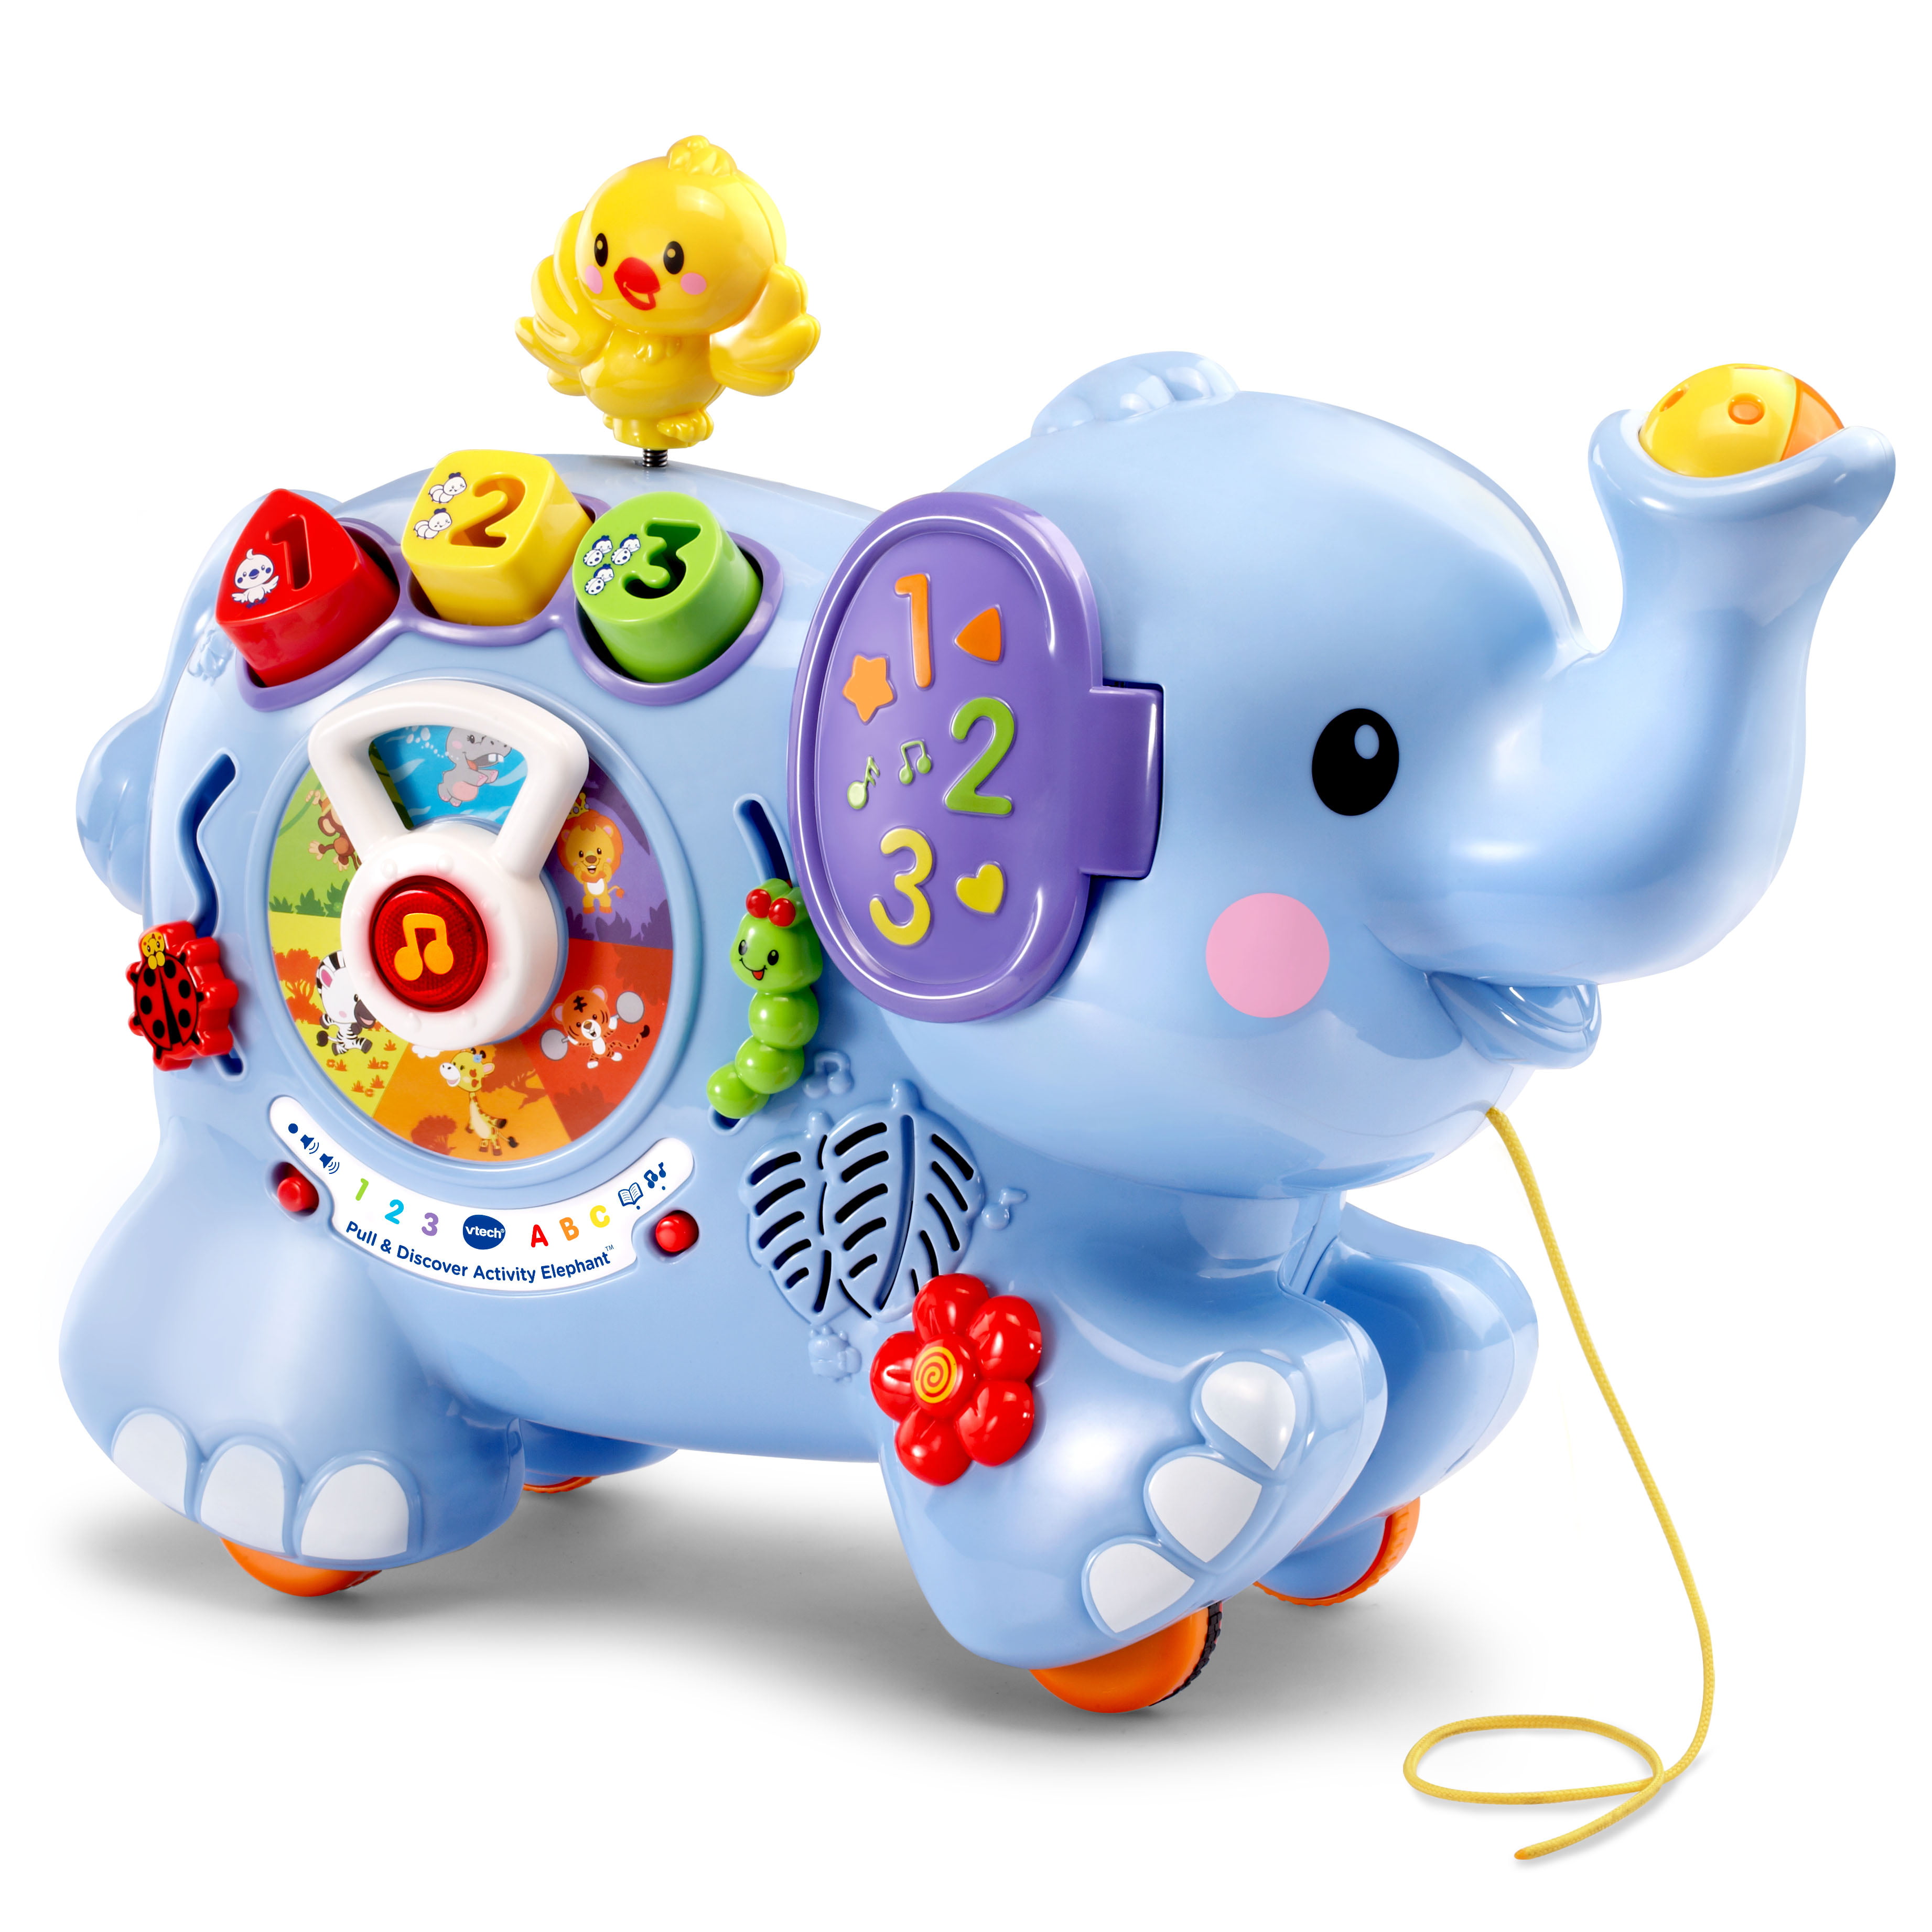 Play elephant. Игрушка слон Vtech Baby. Vtech музыкальная каталка. Vtech интерактивная игрушка. Музыкальная игрушка Слоник.